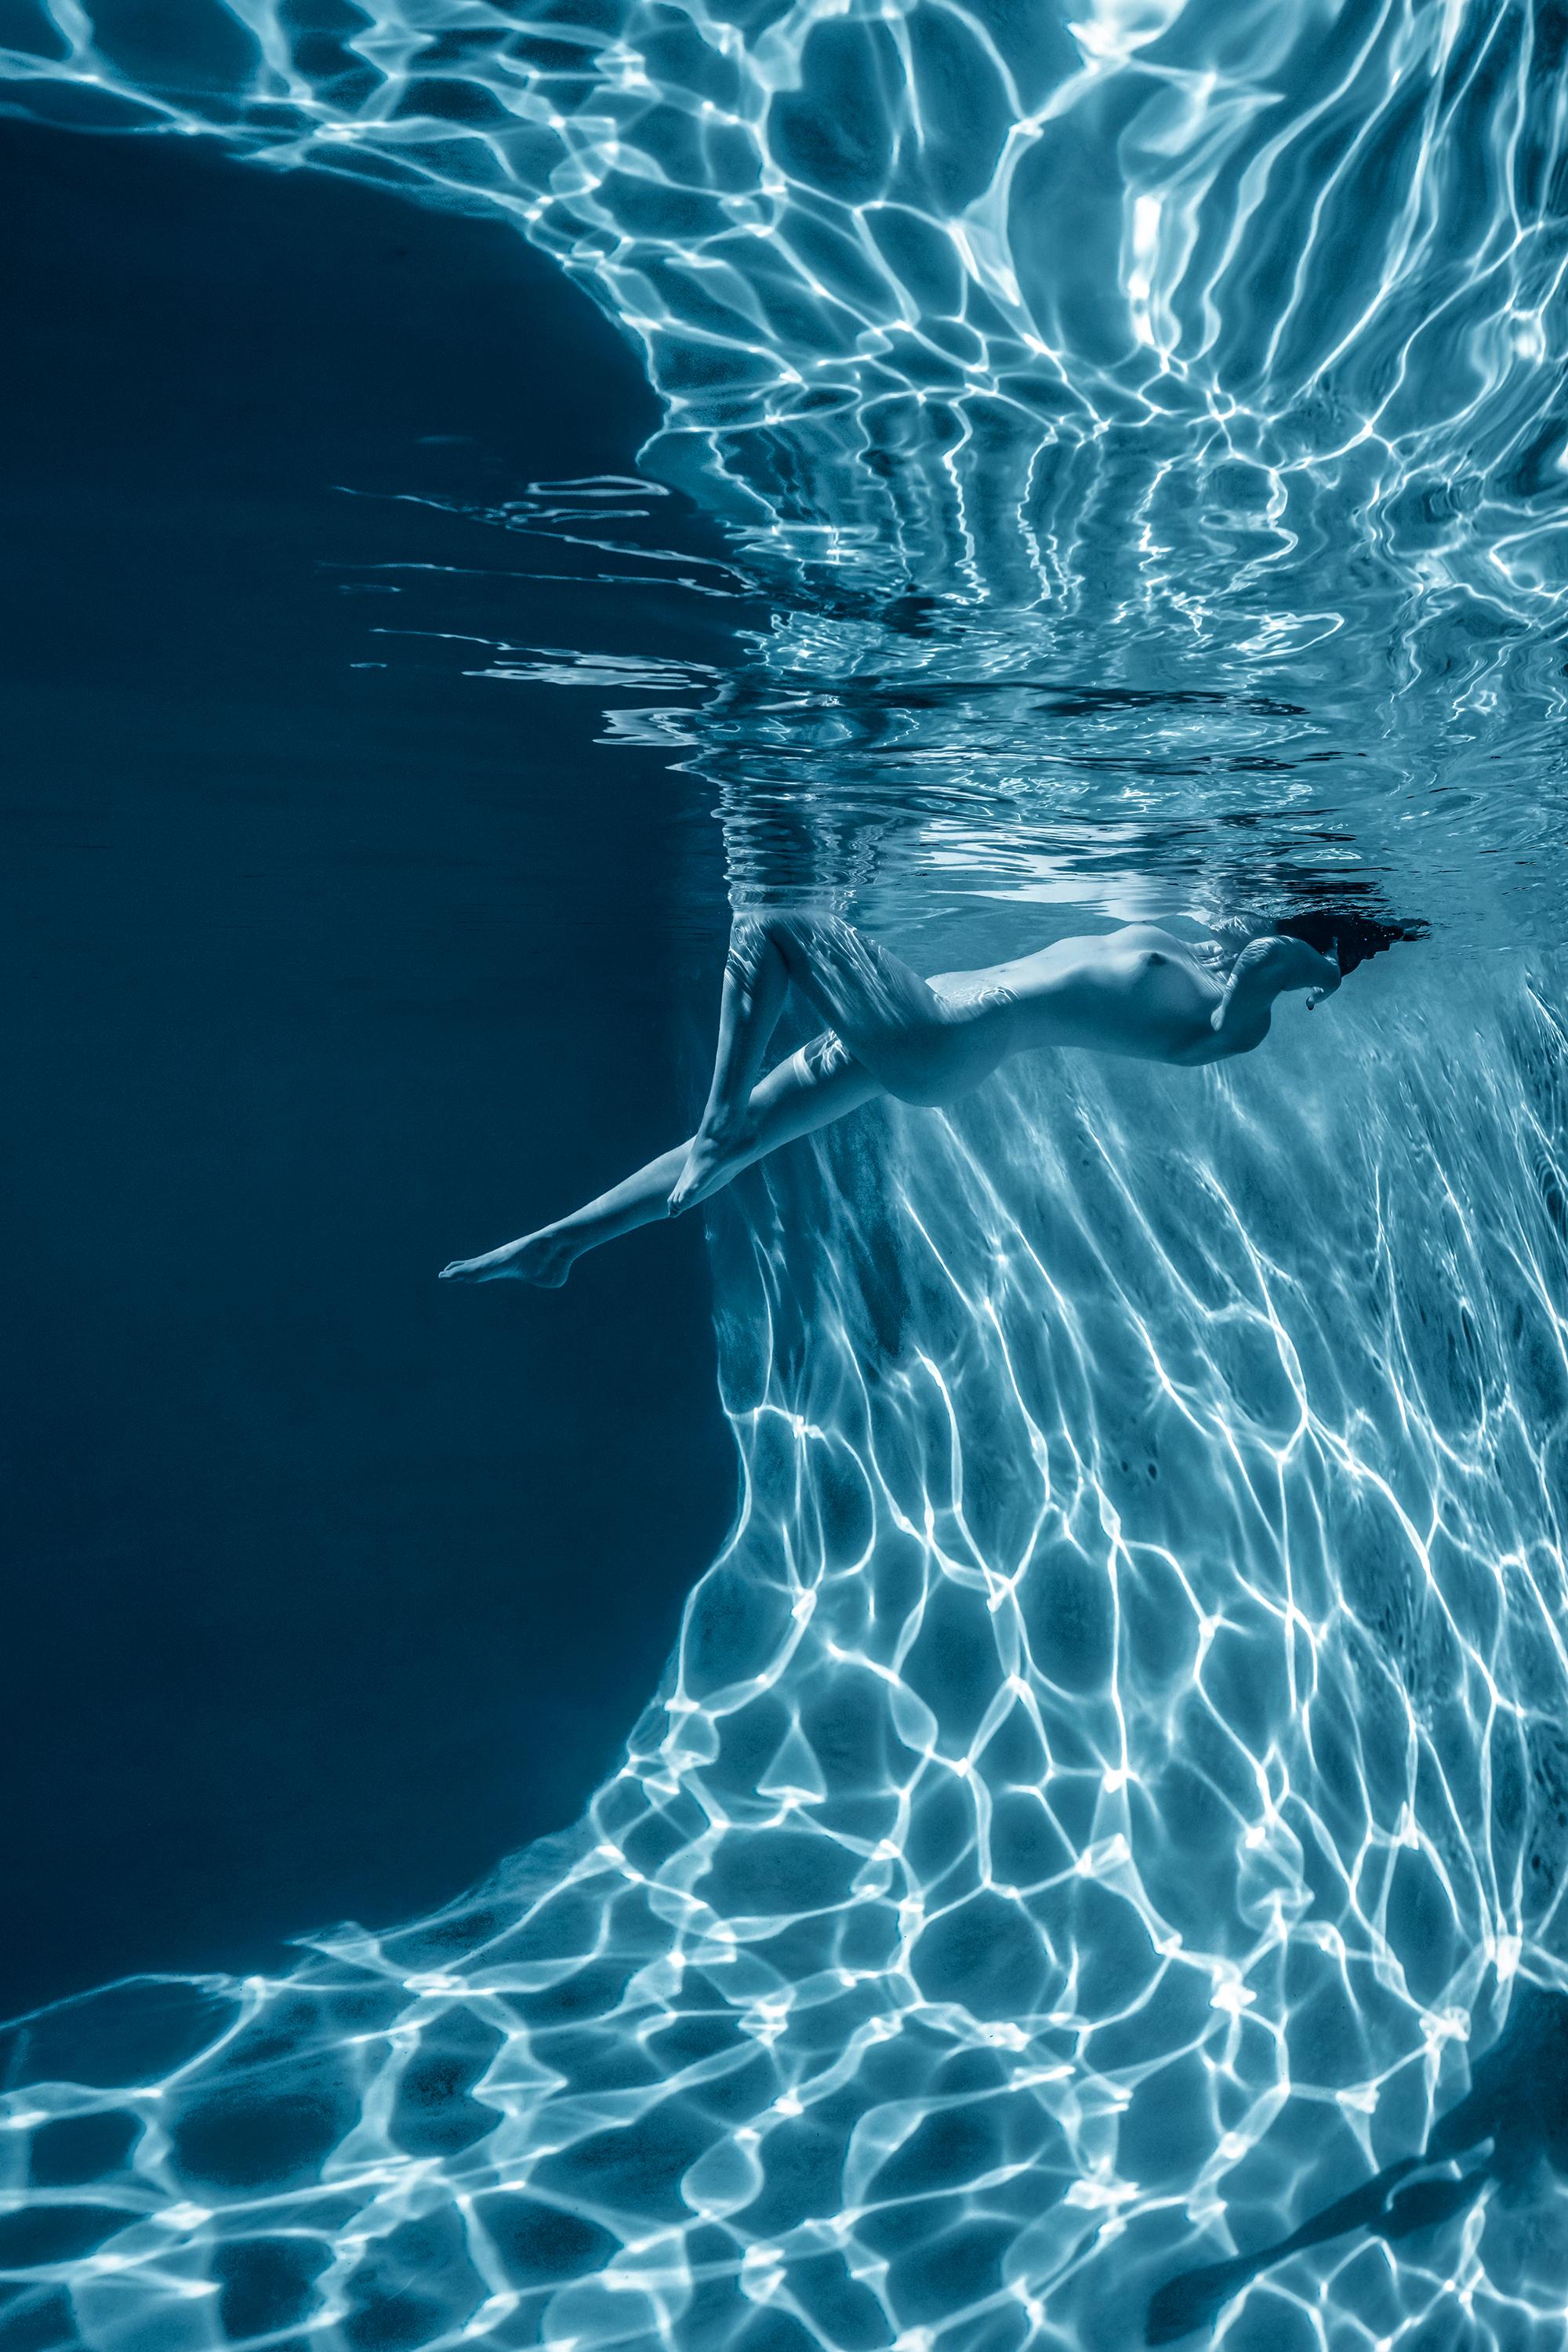 Alex Sher Figurative Photograph - Marble Cave (blue) - underwater nude photograph - print on aluminum 36х24"